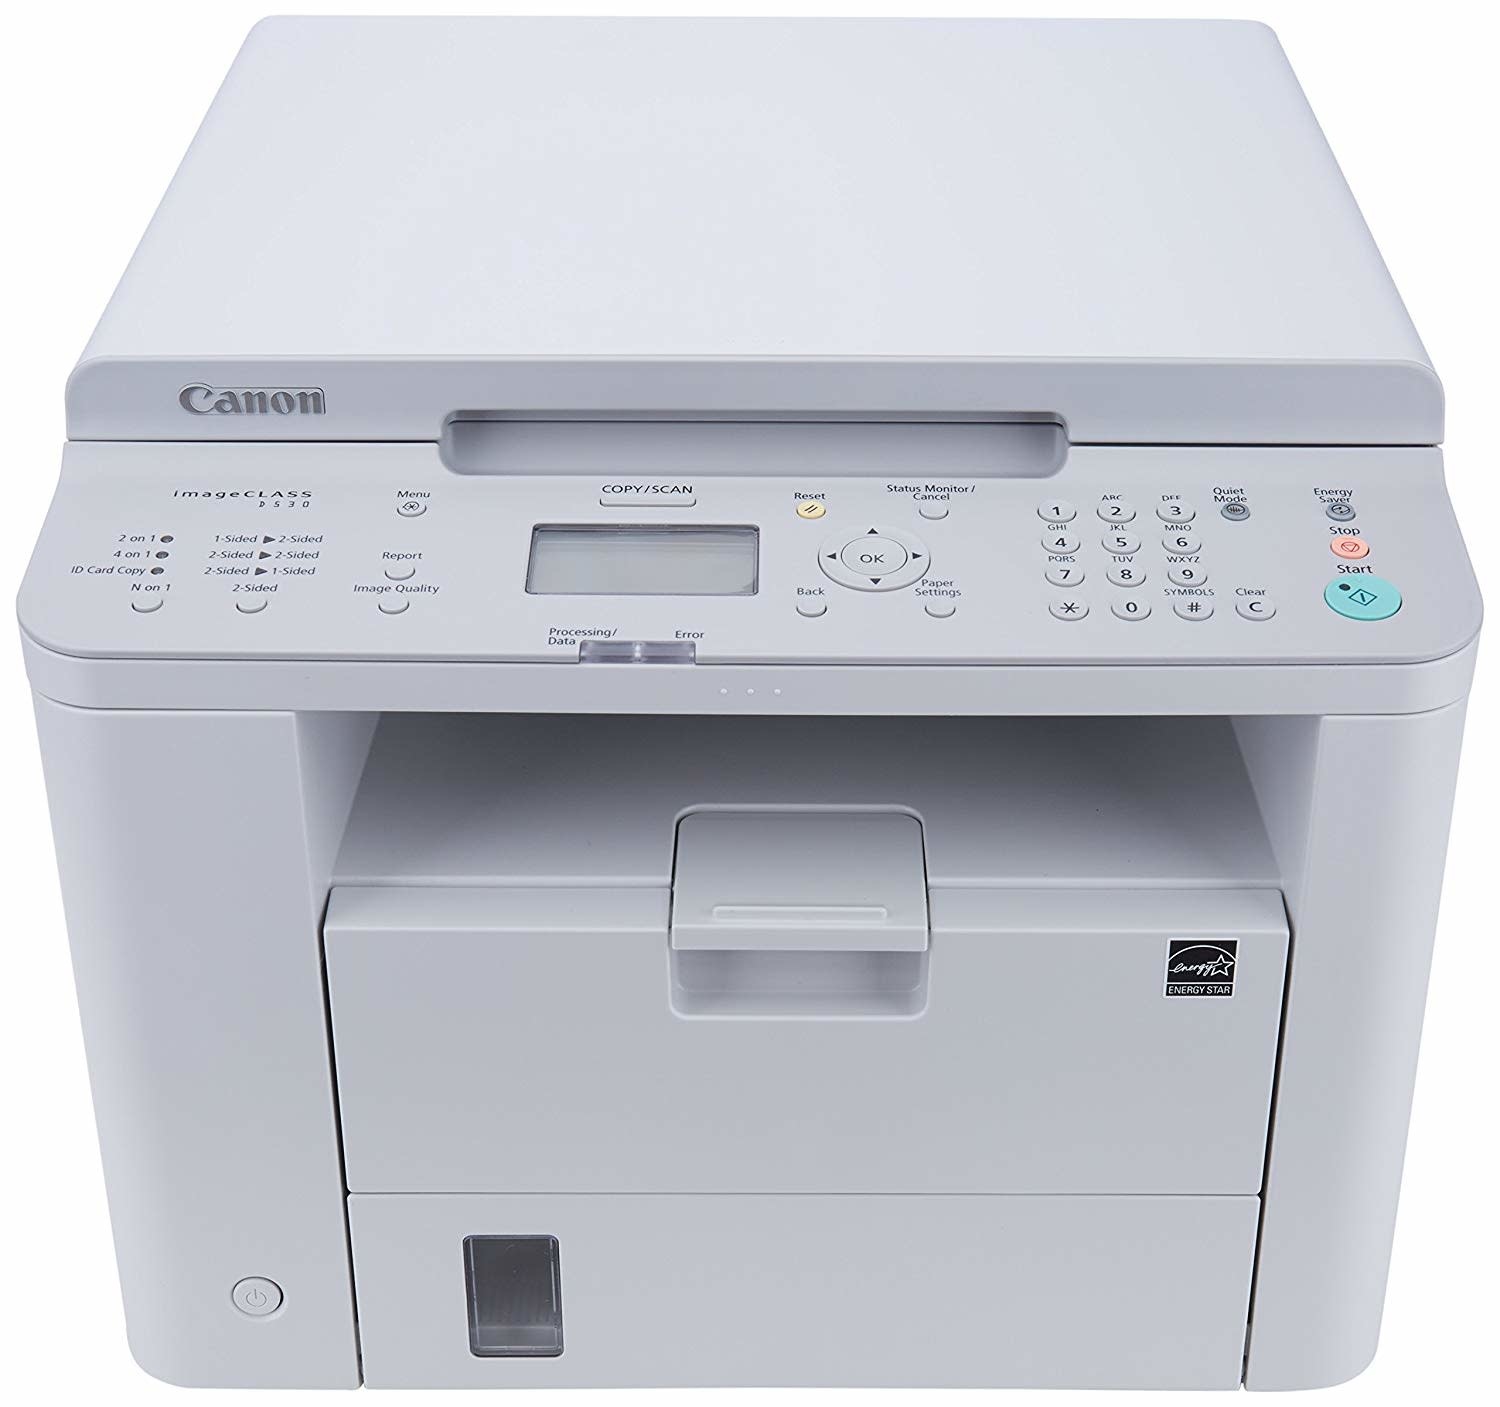 Canon ImageCLASS D530 Monochrome Laser Printer w/ Scanner and Copier